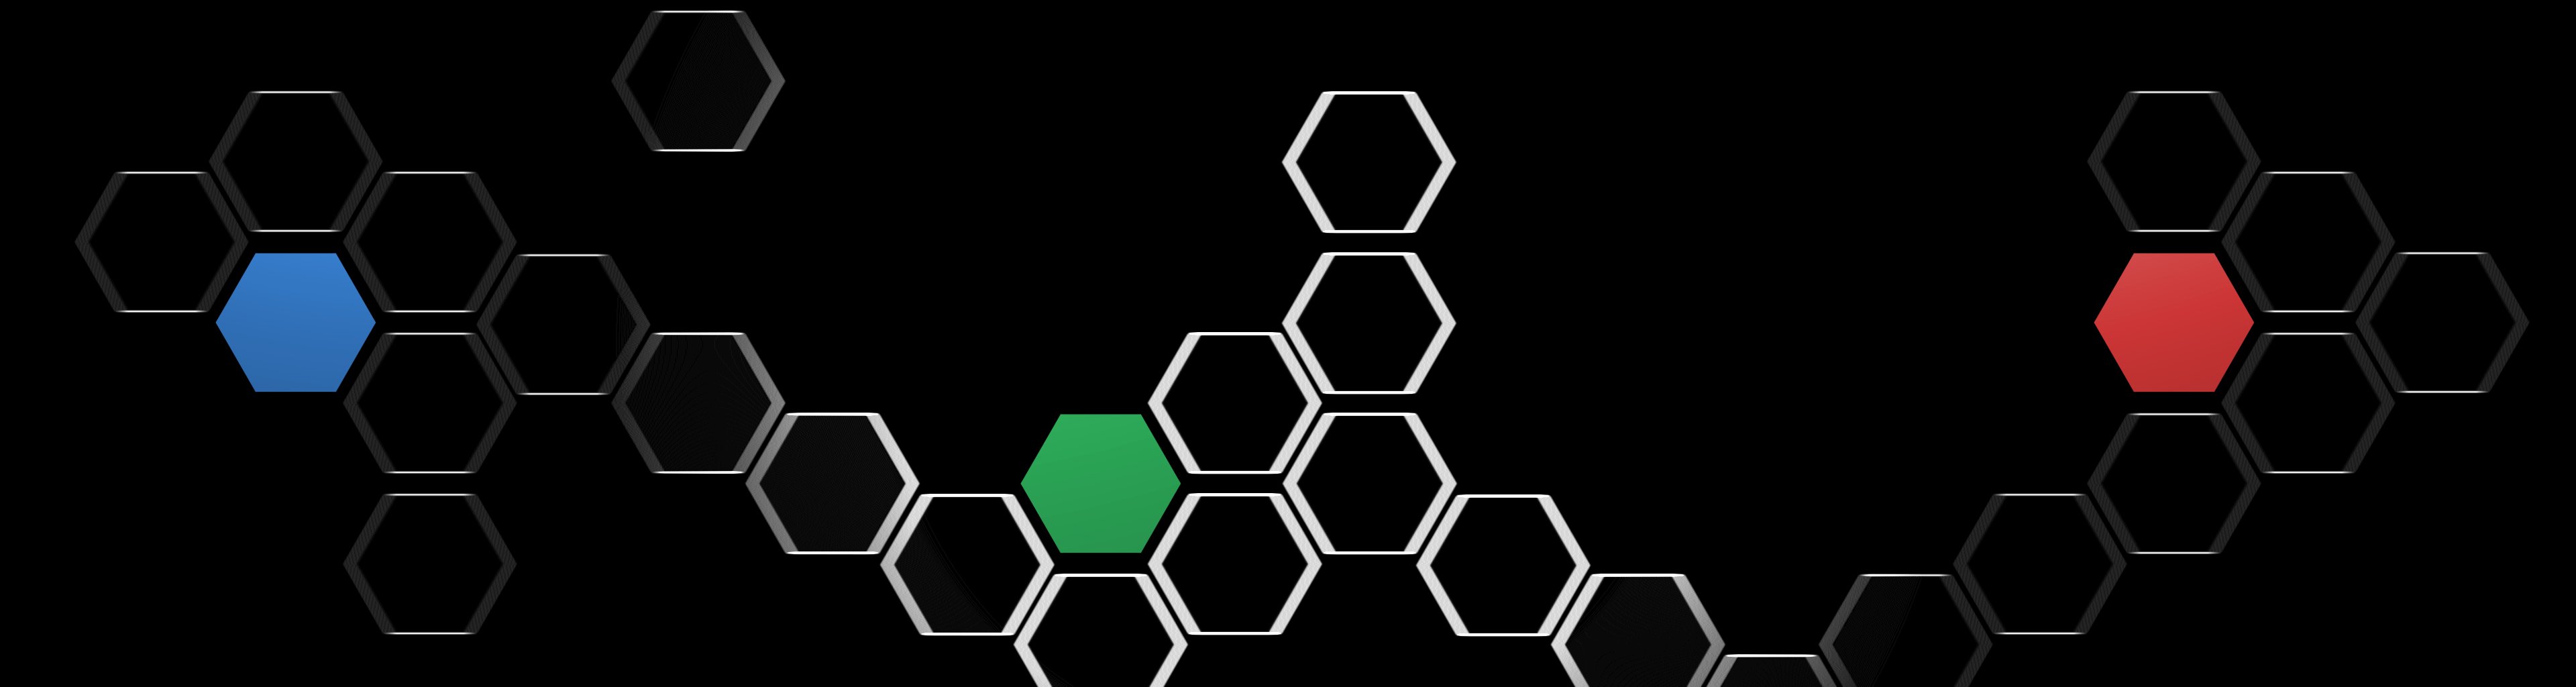 Hexagon 3840x1024